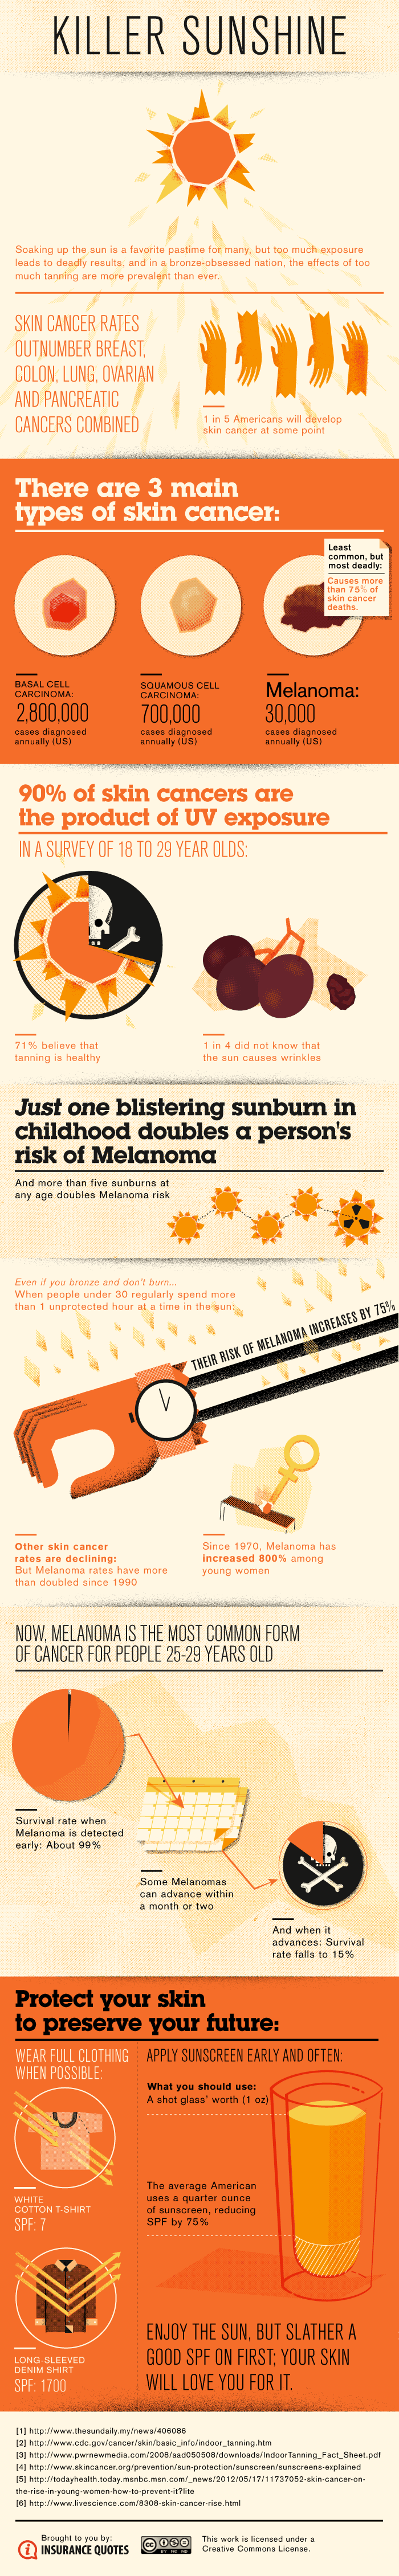 Is Sunshine Killing Us? Infographic